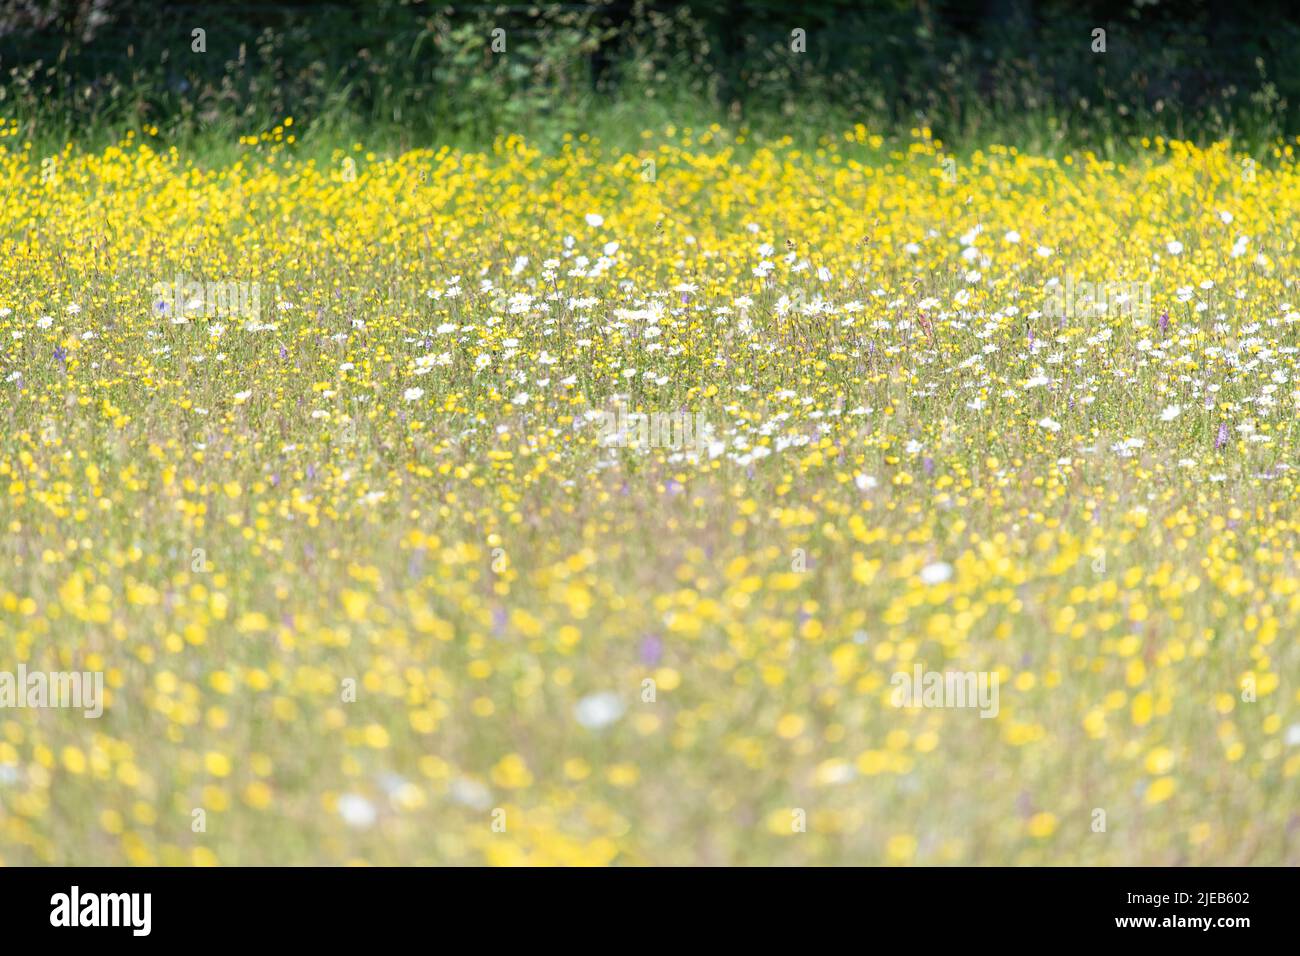 Wildflower field full of buttercups, ox-eye daisies - UK Stock Photo